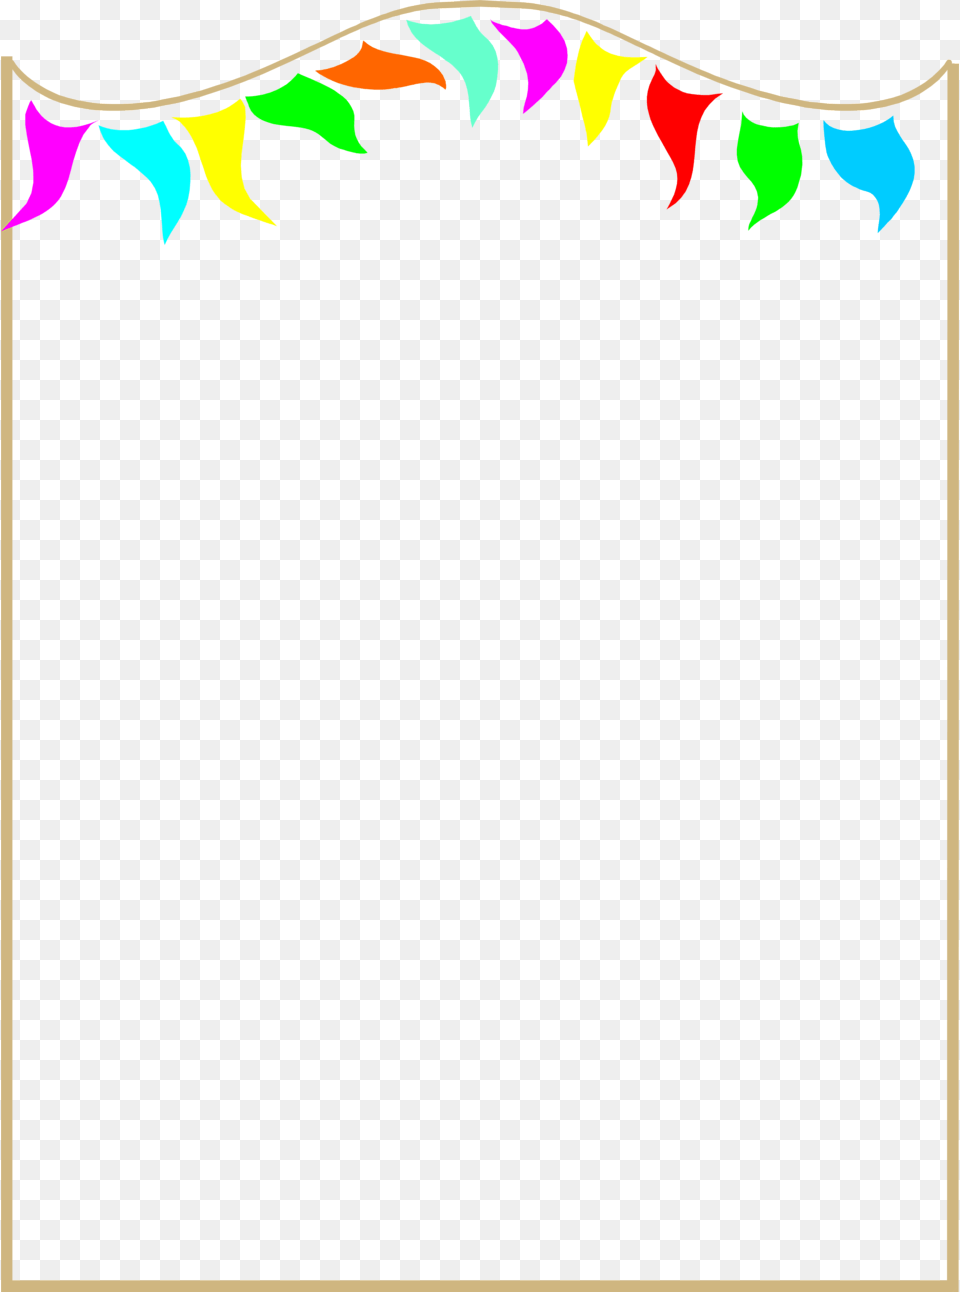 Illustration Of A Blank Frame Border With Colorful Frame Border Design Colorful, Paper Free Transparent Png